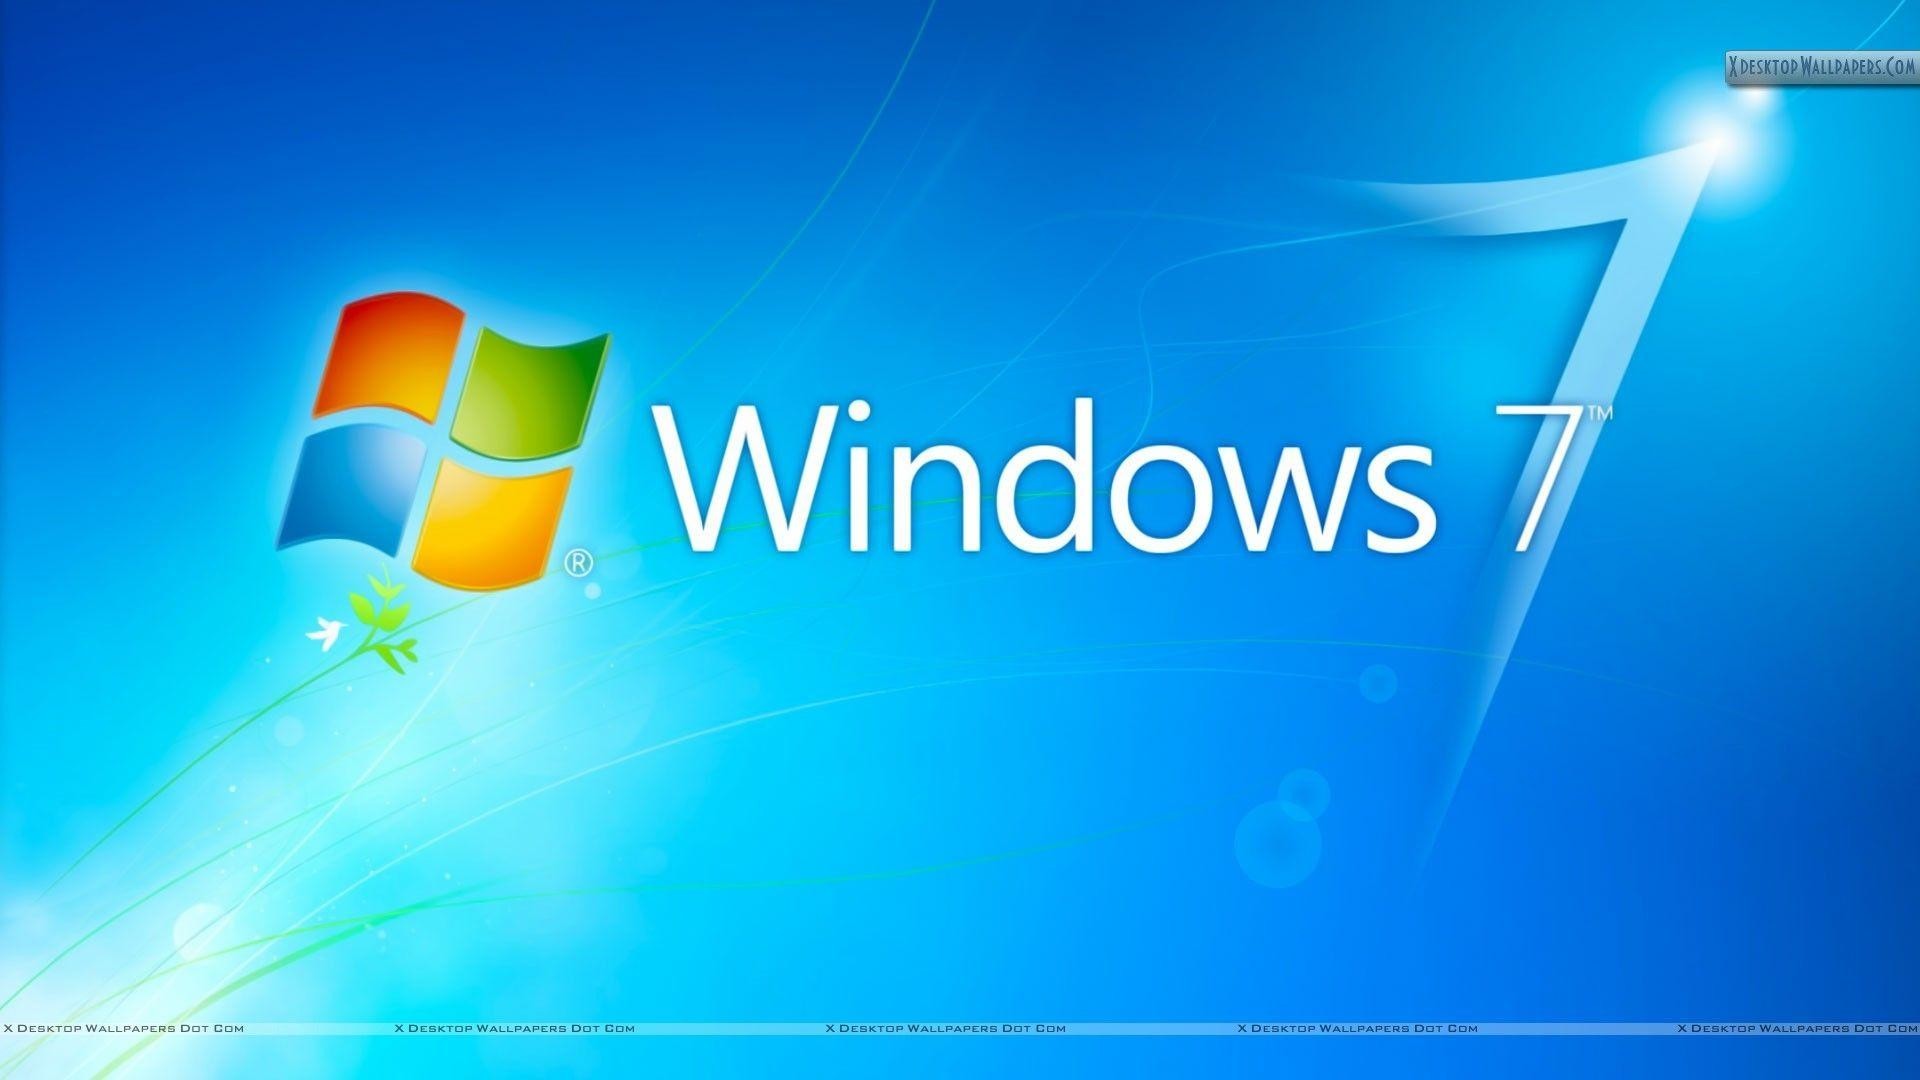 download logos 7 for windows